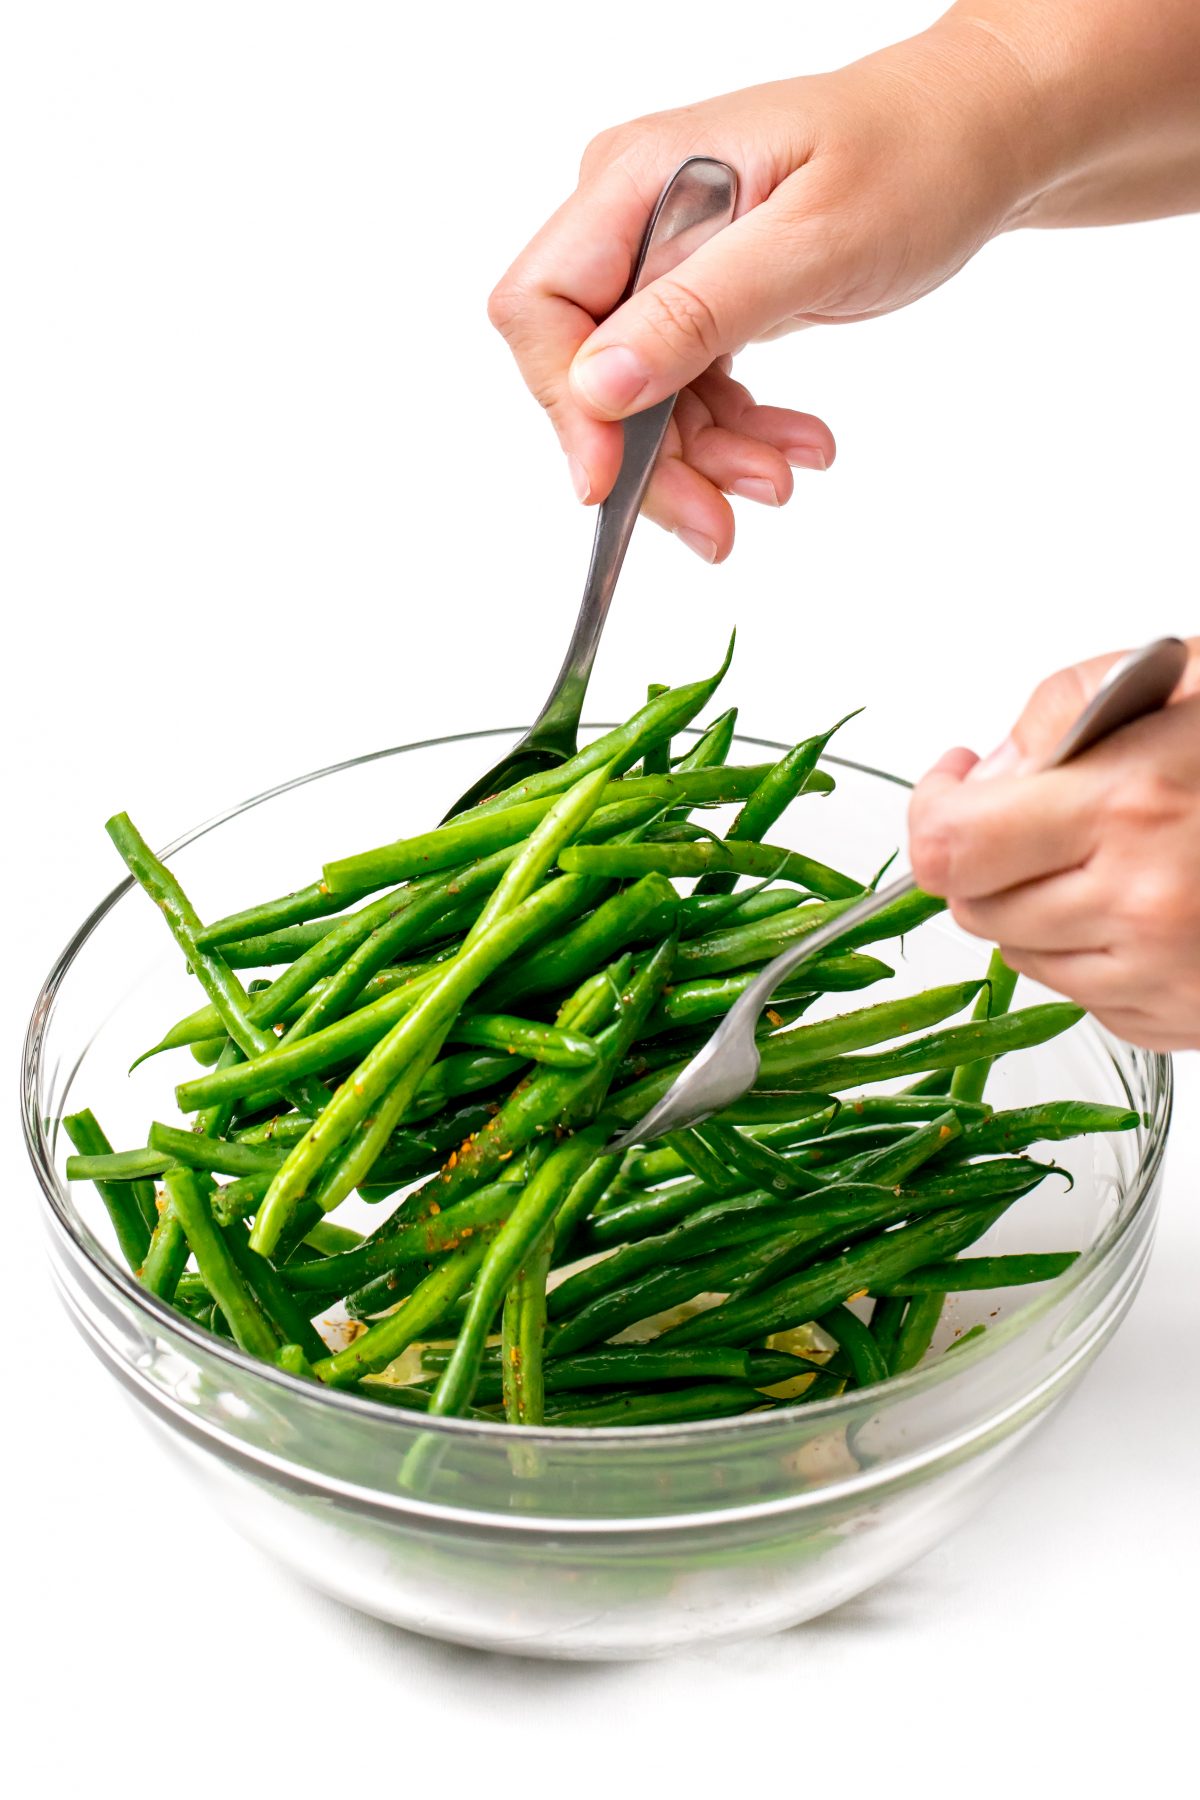 Toss green beans in bowl